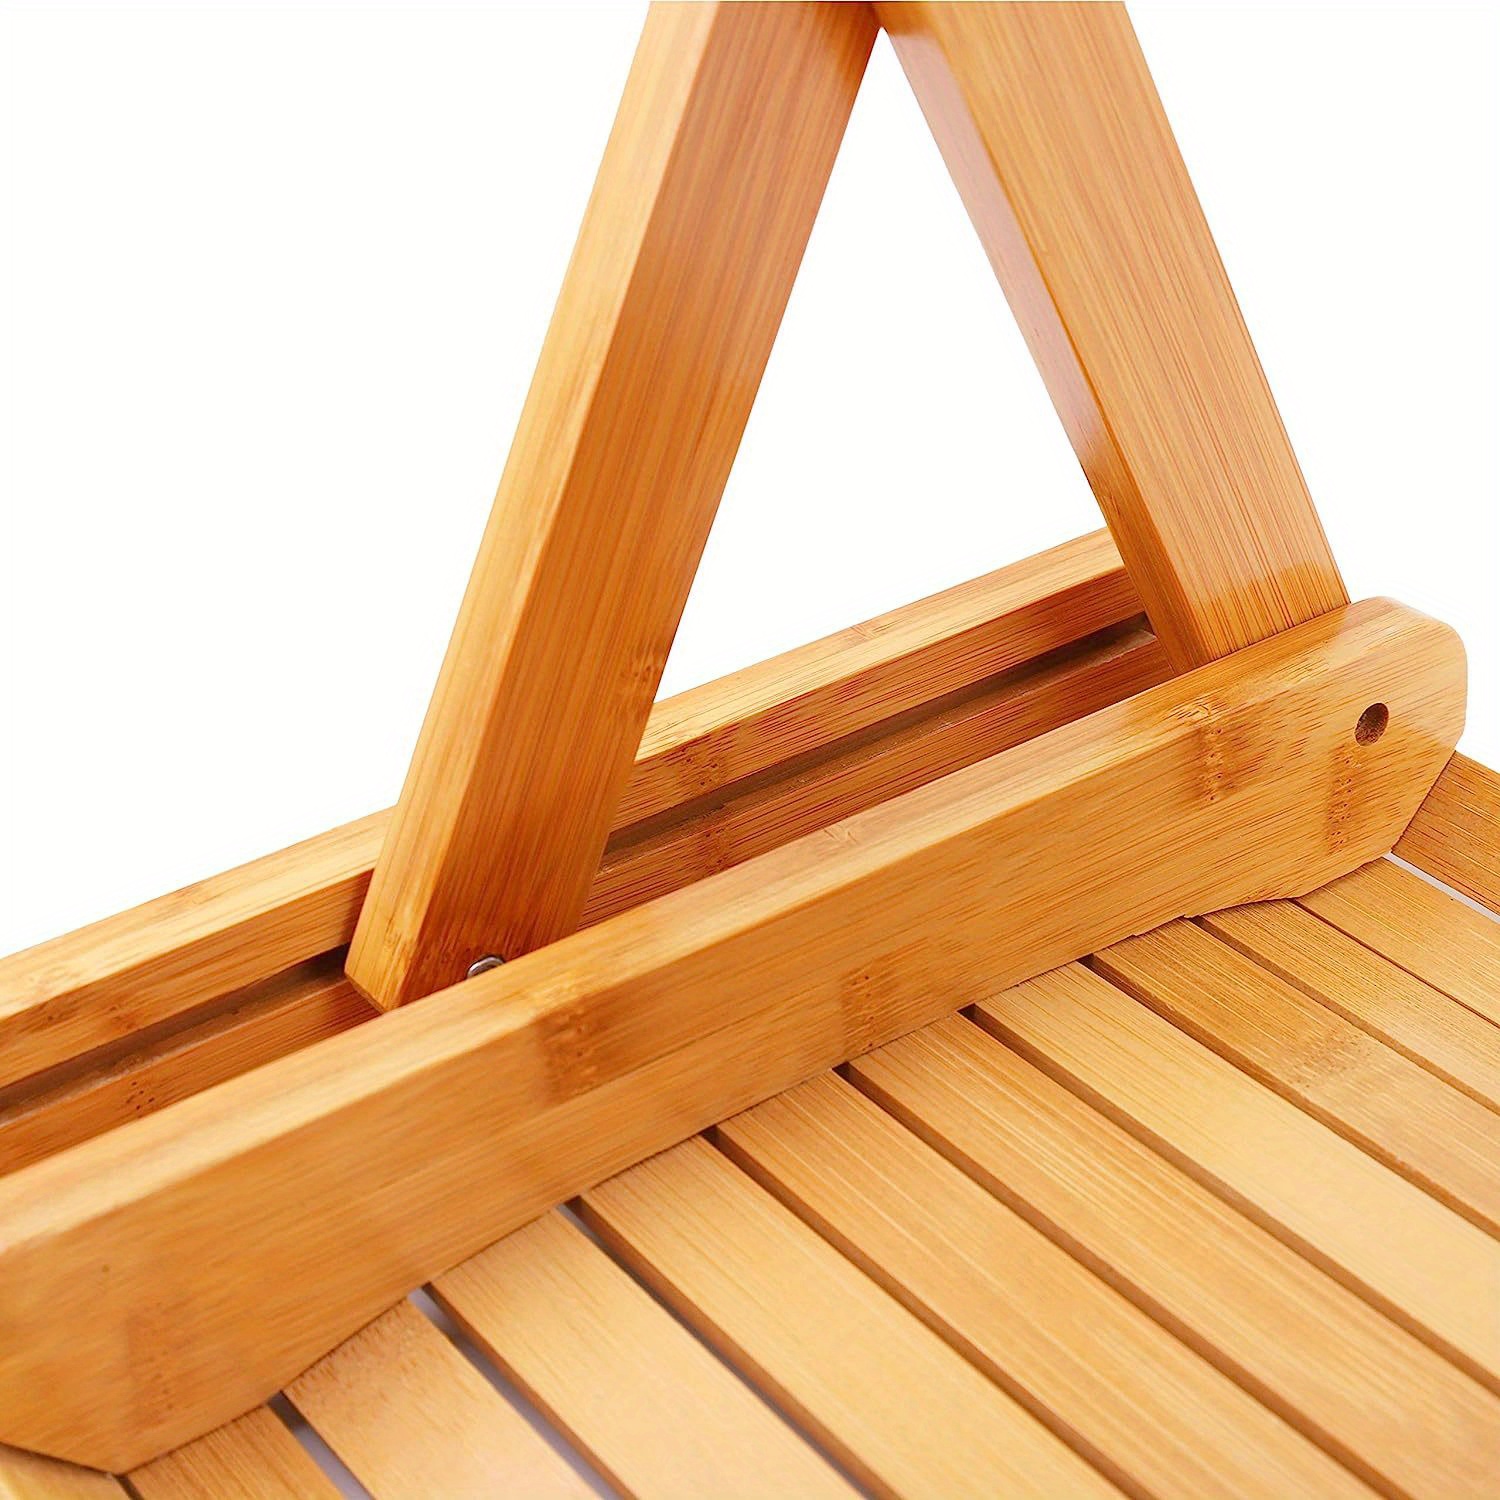  Felenny Taburete de bambú totalmente montado de madera para  spa, taburete bajo de bambú para cocina, dormitorio, sala de estar, baño (M)